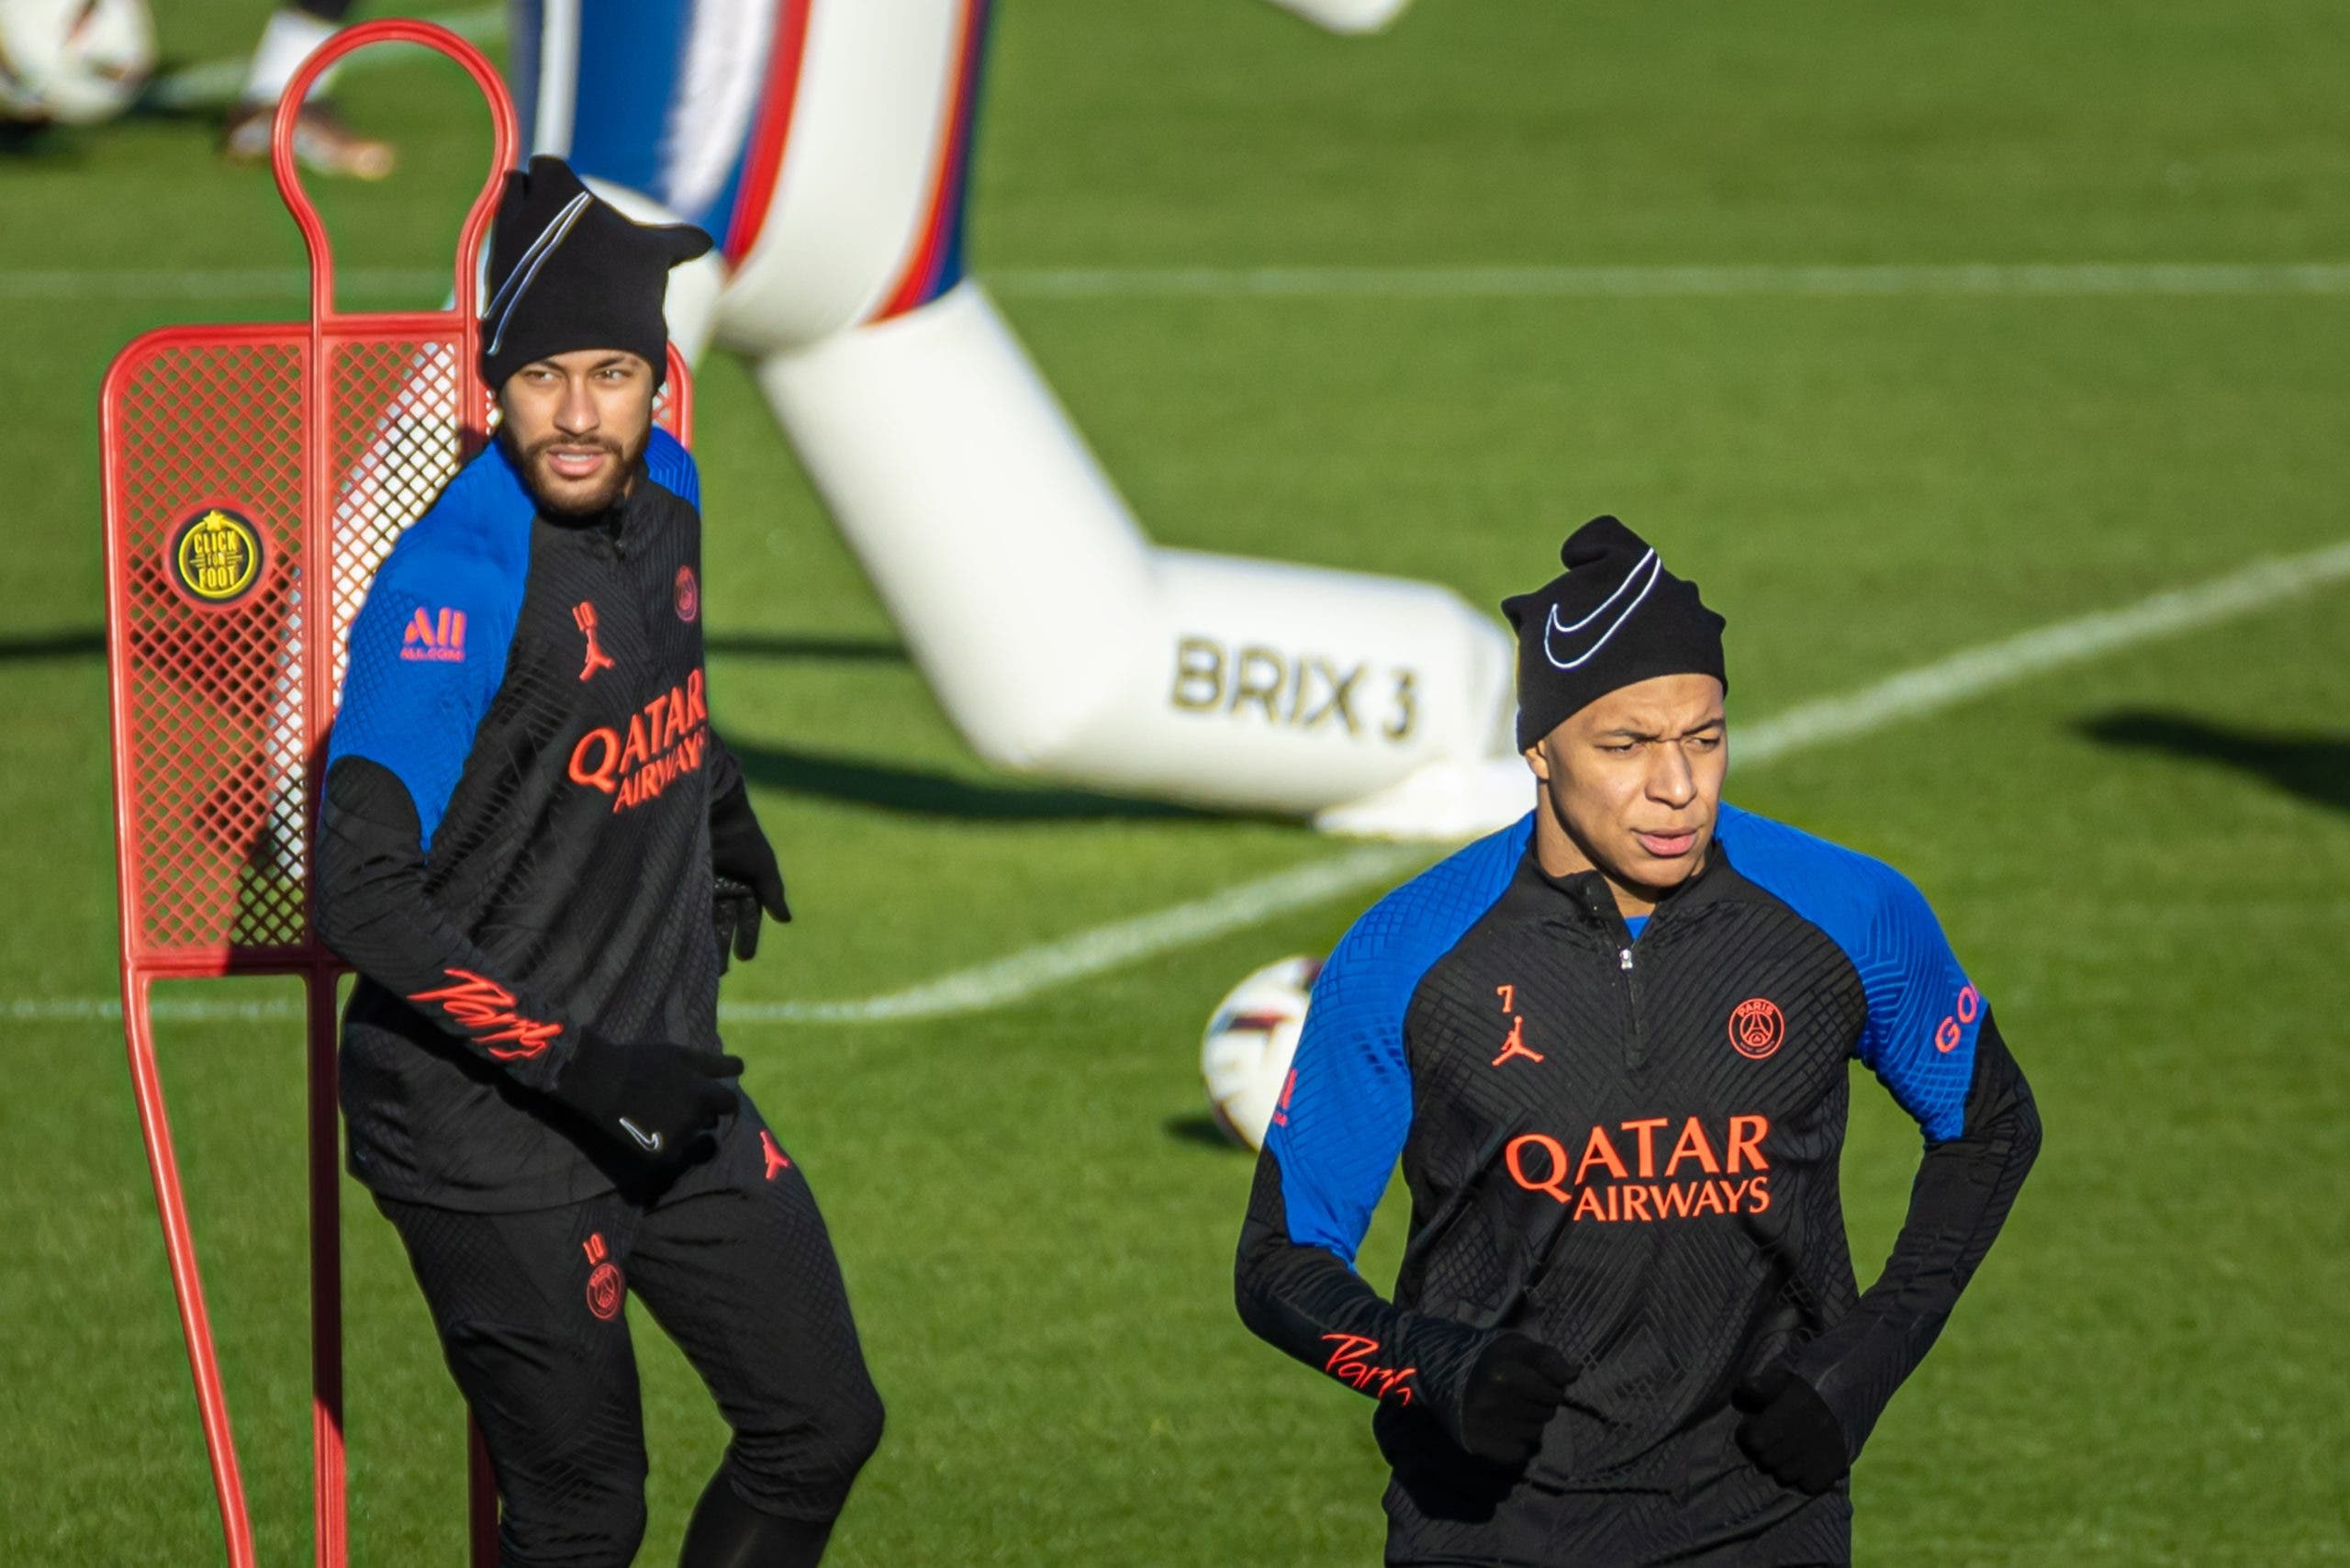 Mbappé y Neymar buscan revancha; liga francesa se reanuda